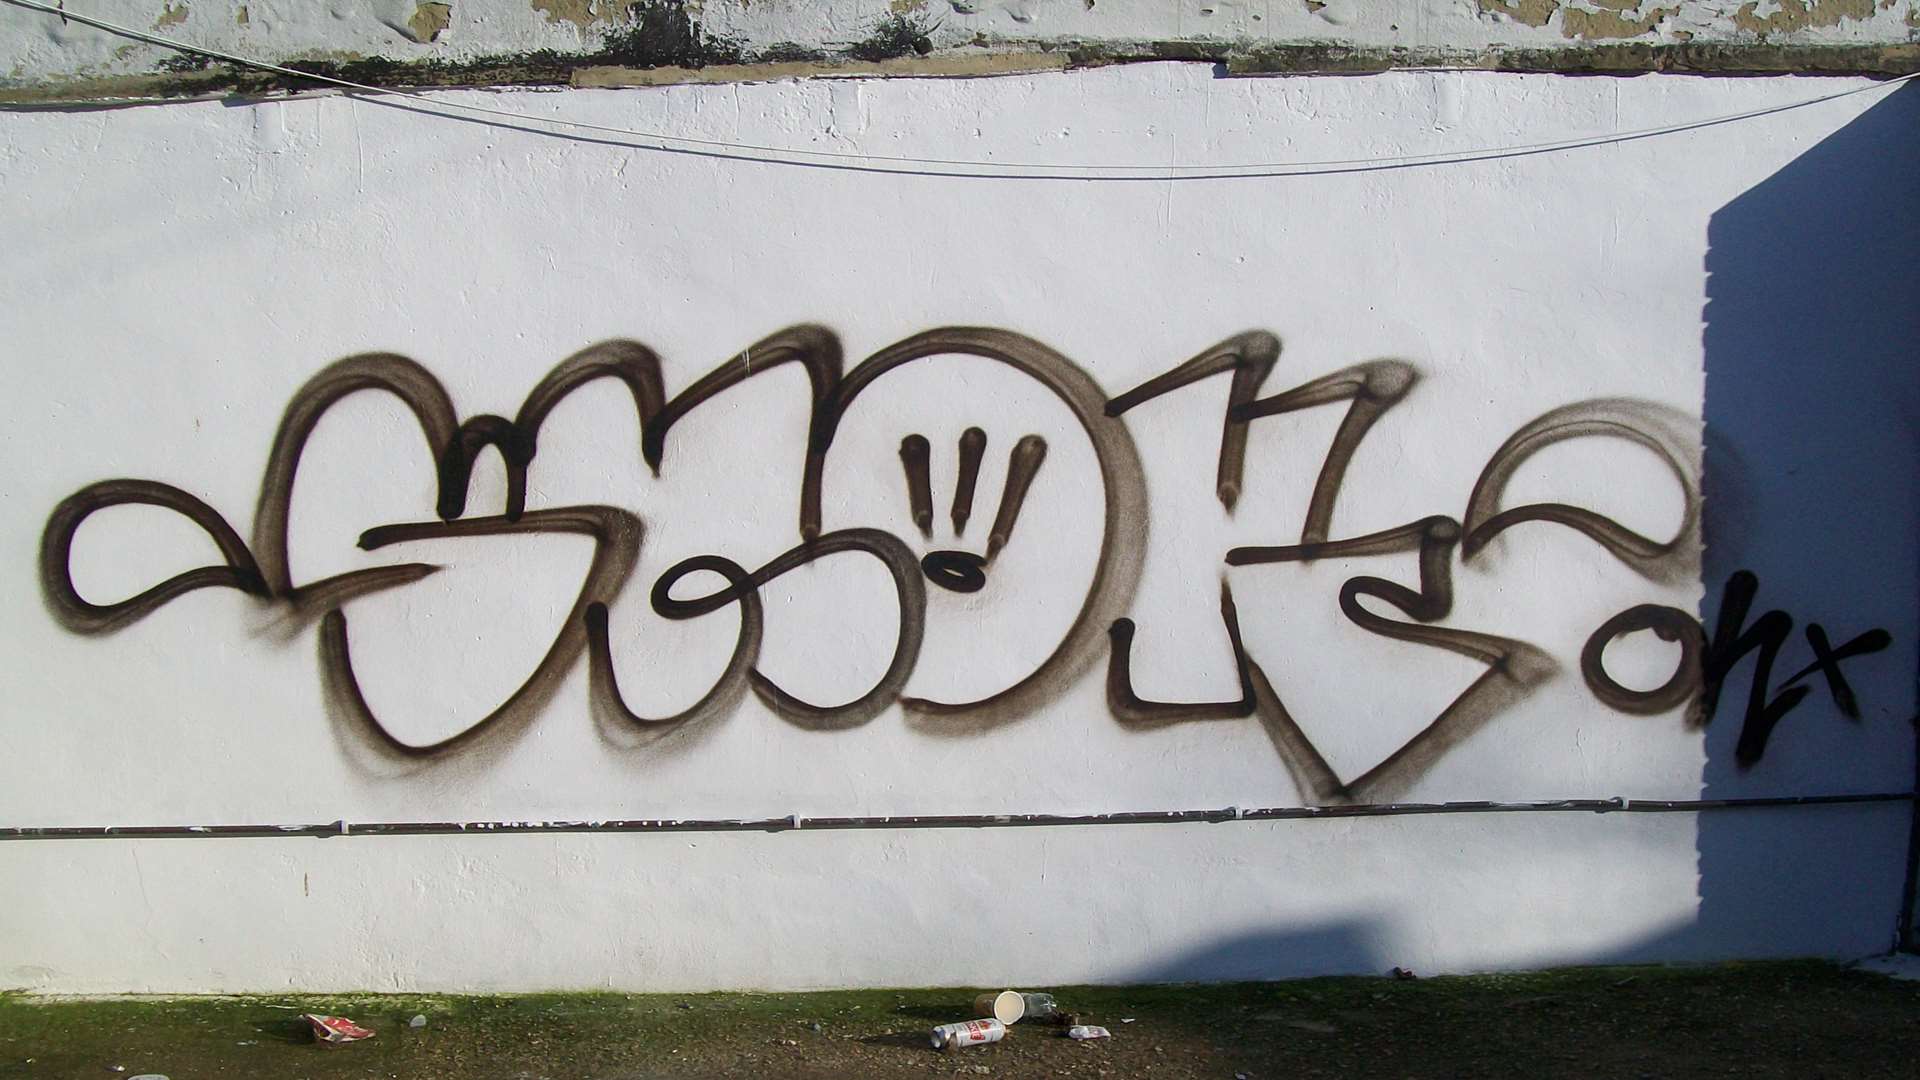 Graffiti in Thanet